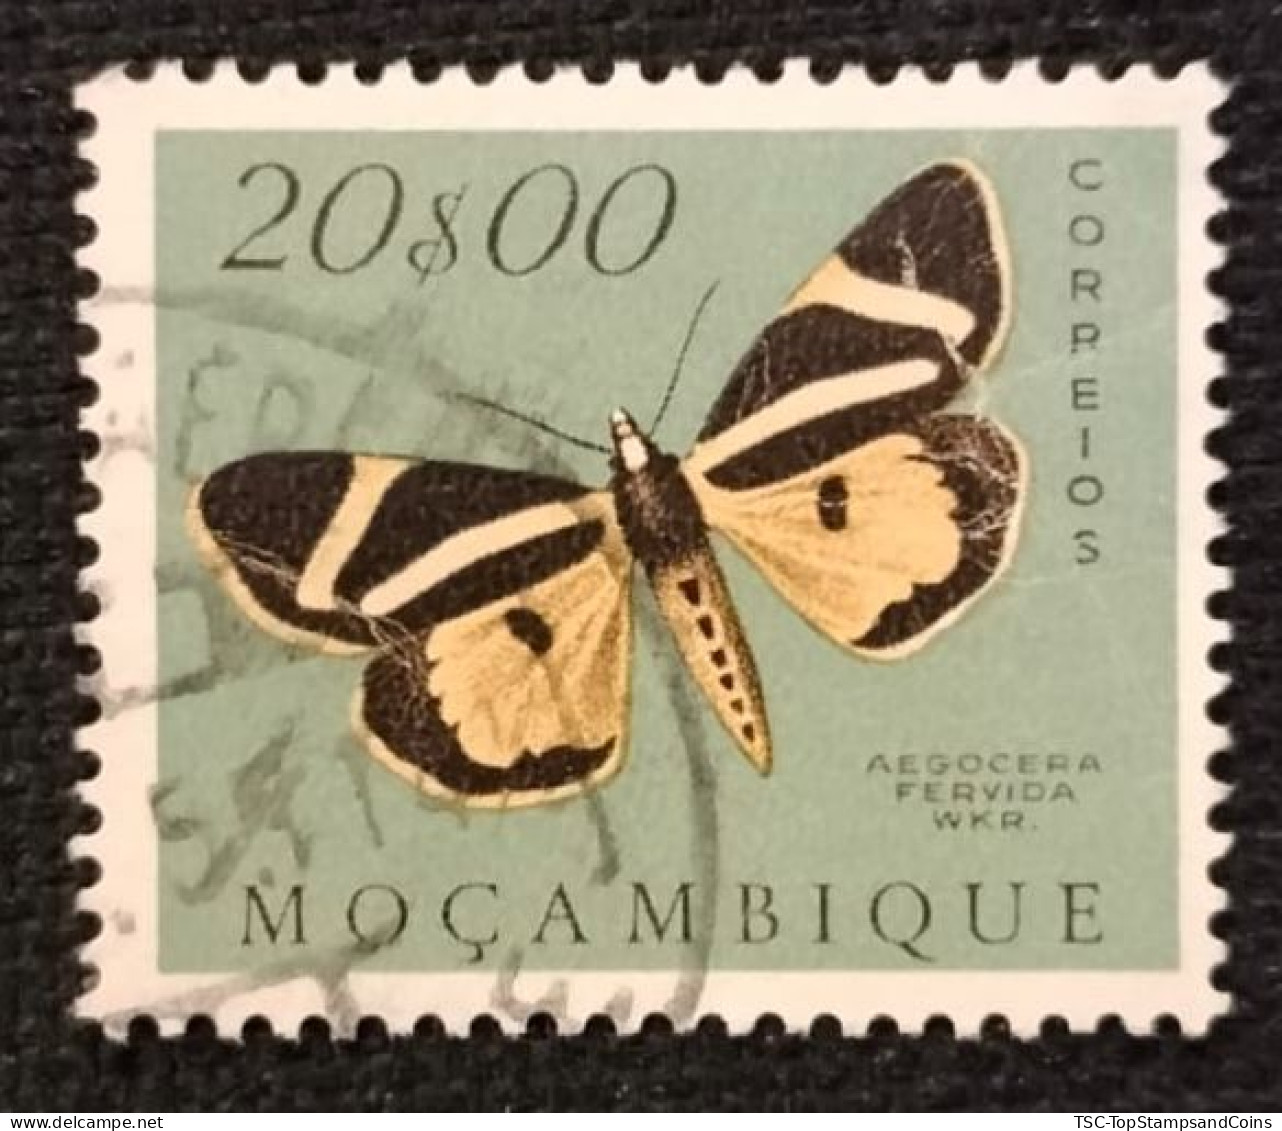 MOZPO0407U4 - Mozambique Butterflies - 20$00 Used Stamp - Mozambique - 1953 - Mozambique